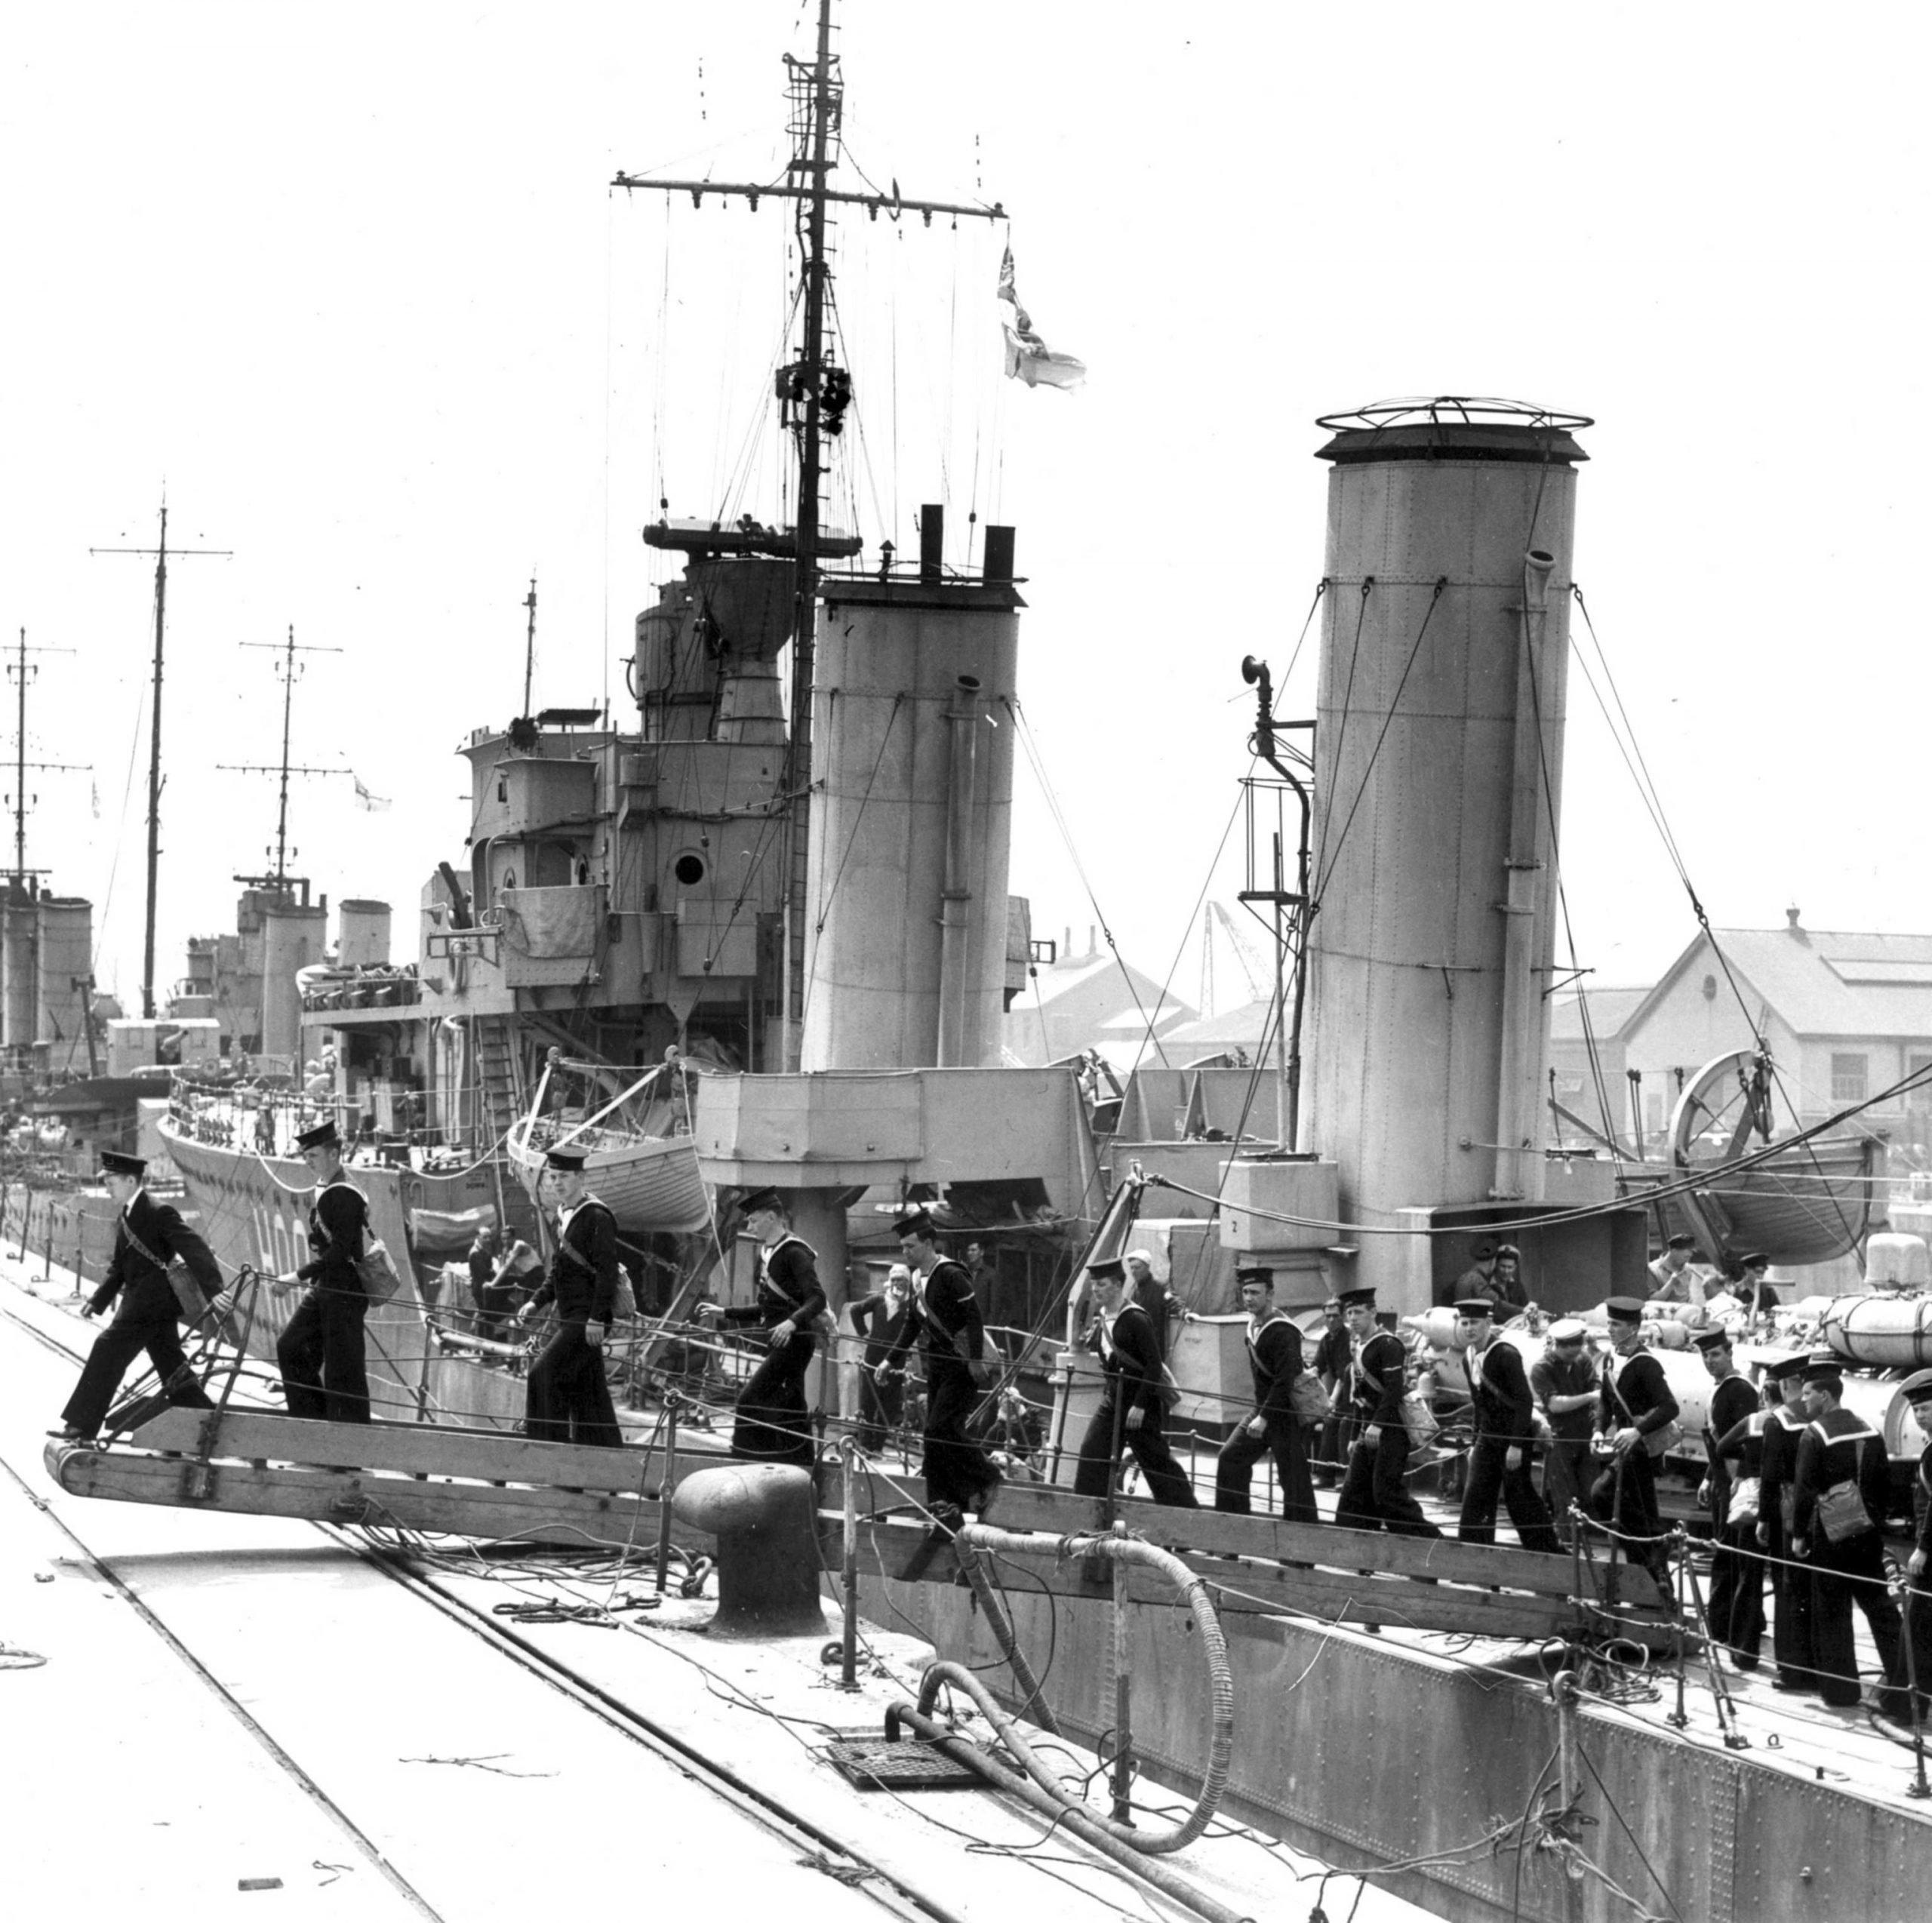 The crew of the Canadian Restigouche destroyer